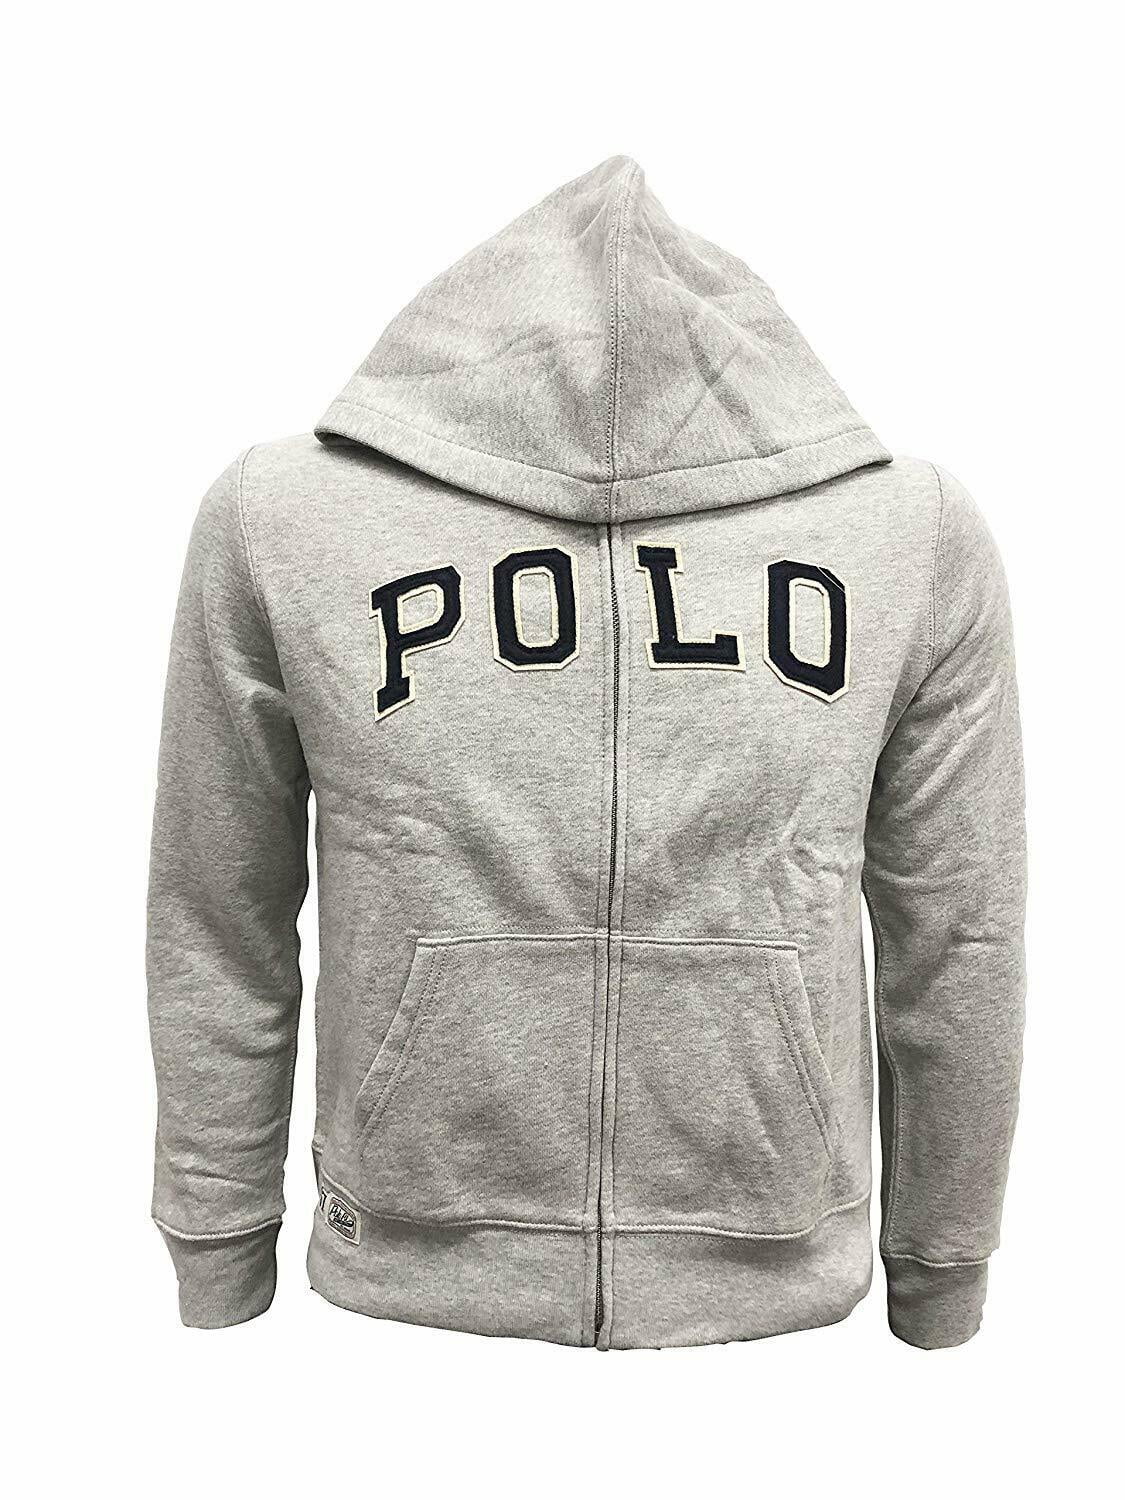 New Polo Ralph Lauren Boys Heather Gray Full Zip Hoodie Sweater Large L ...